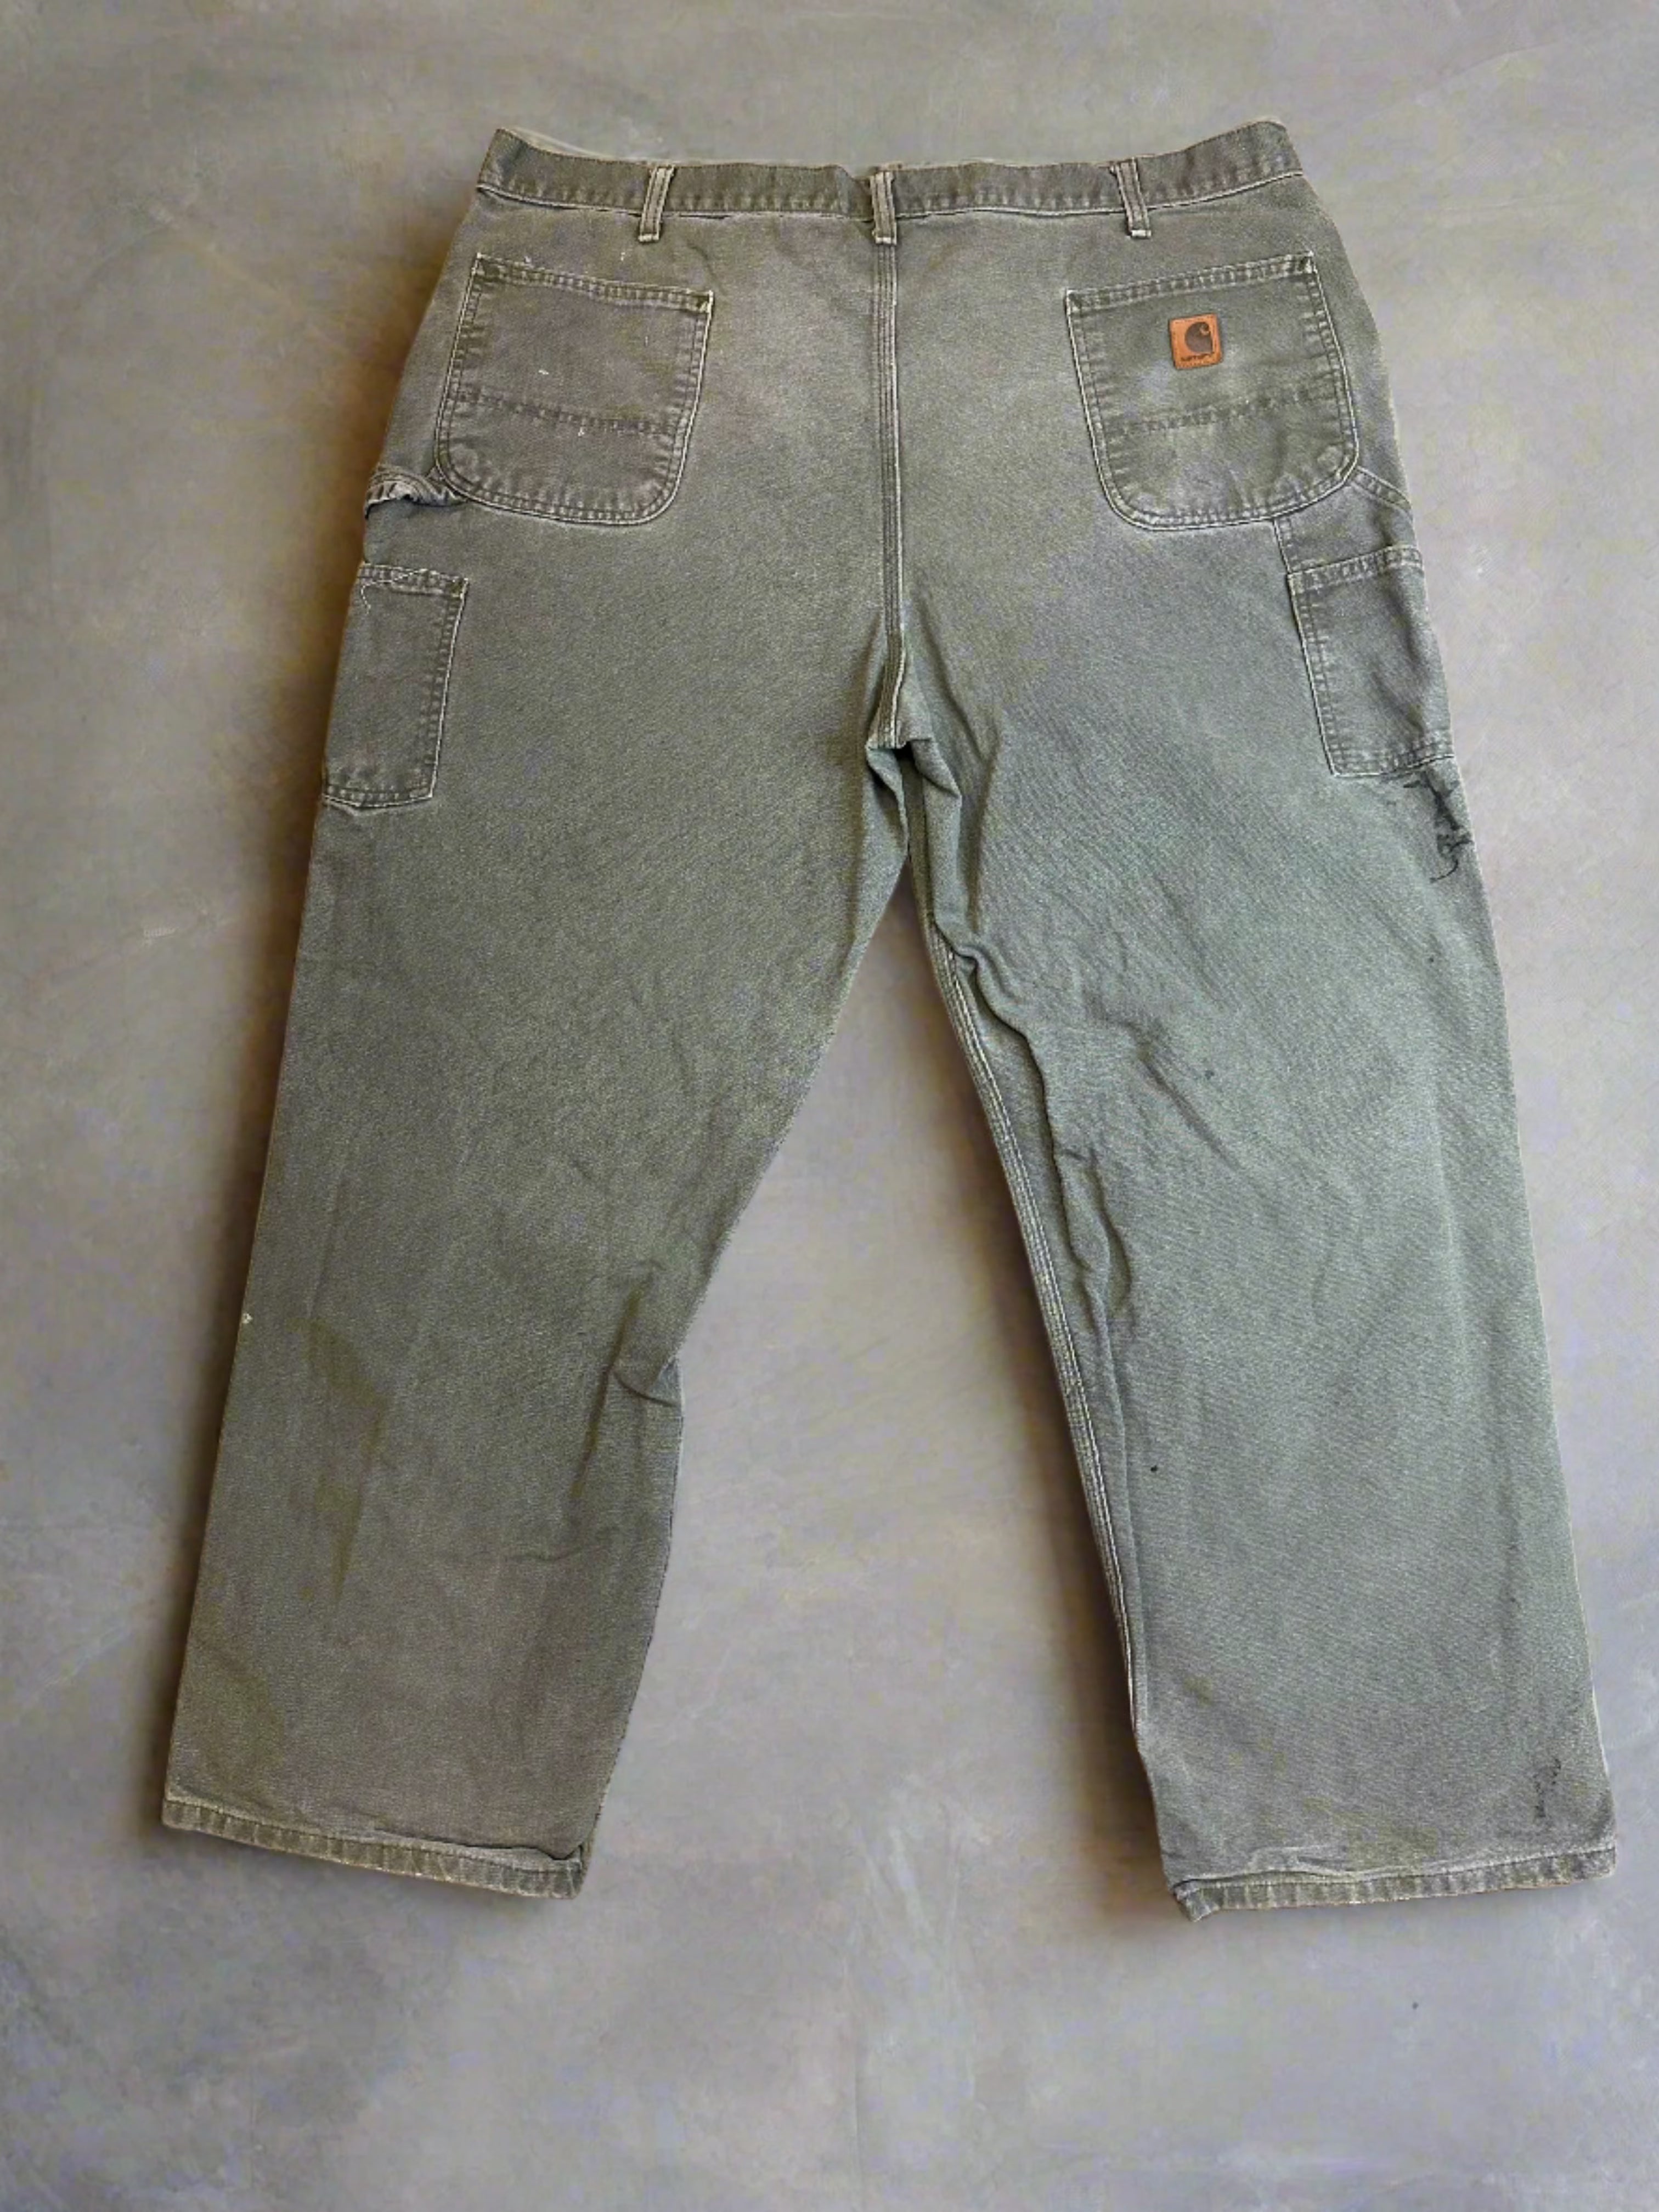 Vintage Carhartt Carpenter Pants - 44x32 size